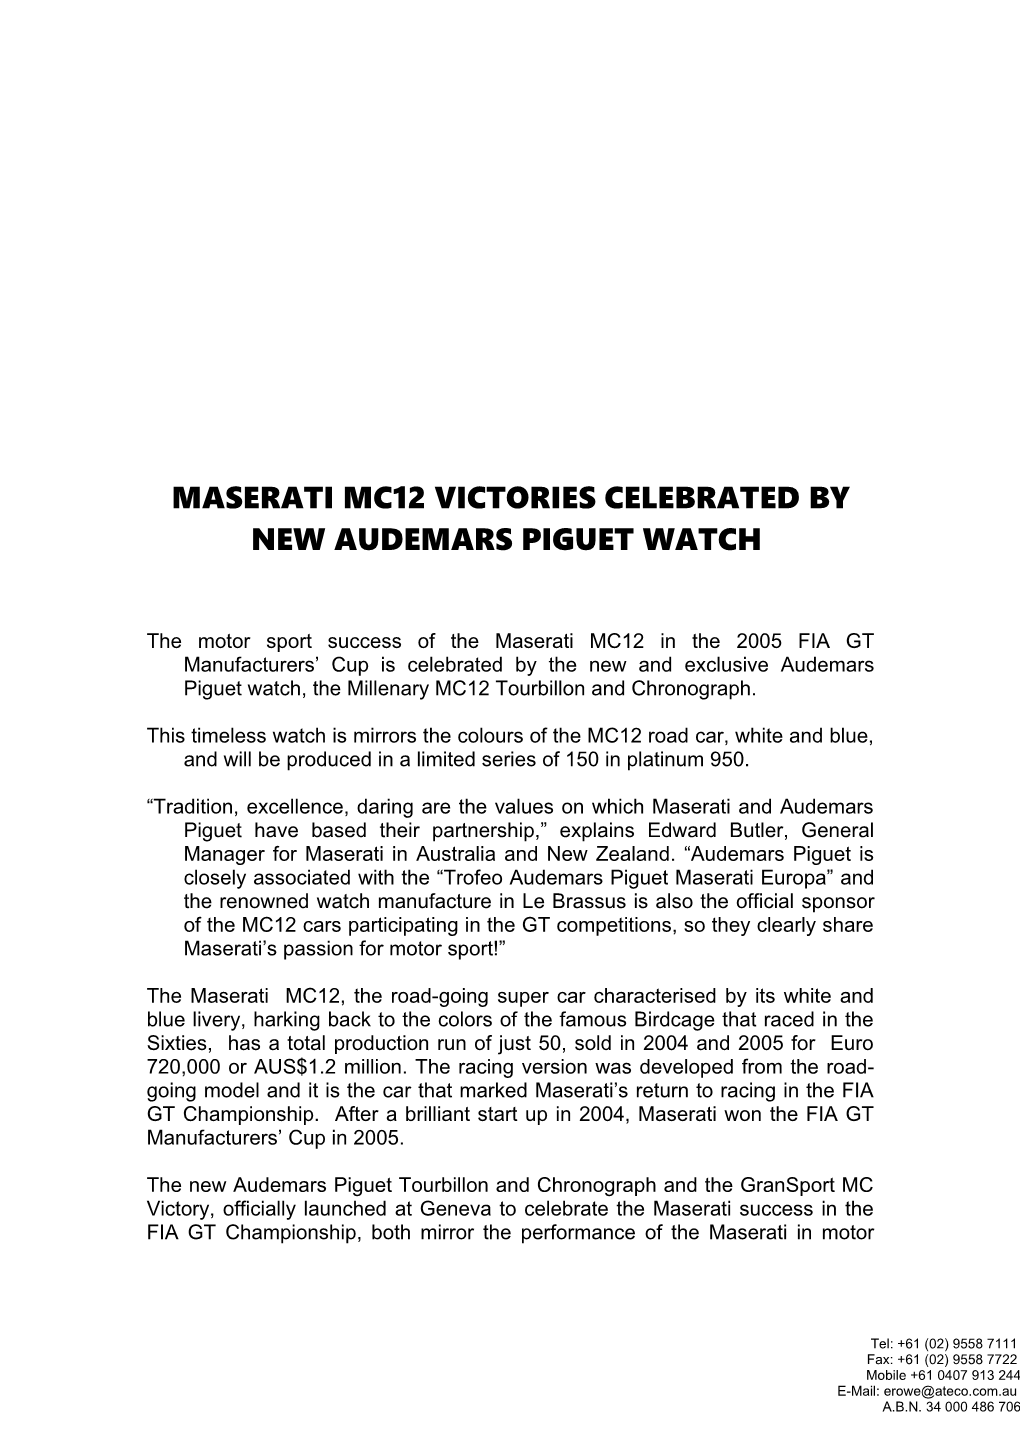 Maserati Mc12 Victories Celebrated by New Audemars Piguet Watch